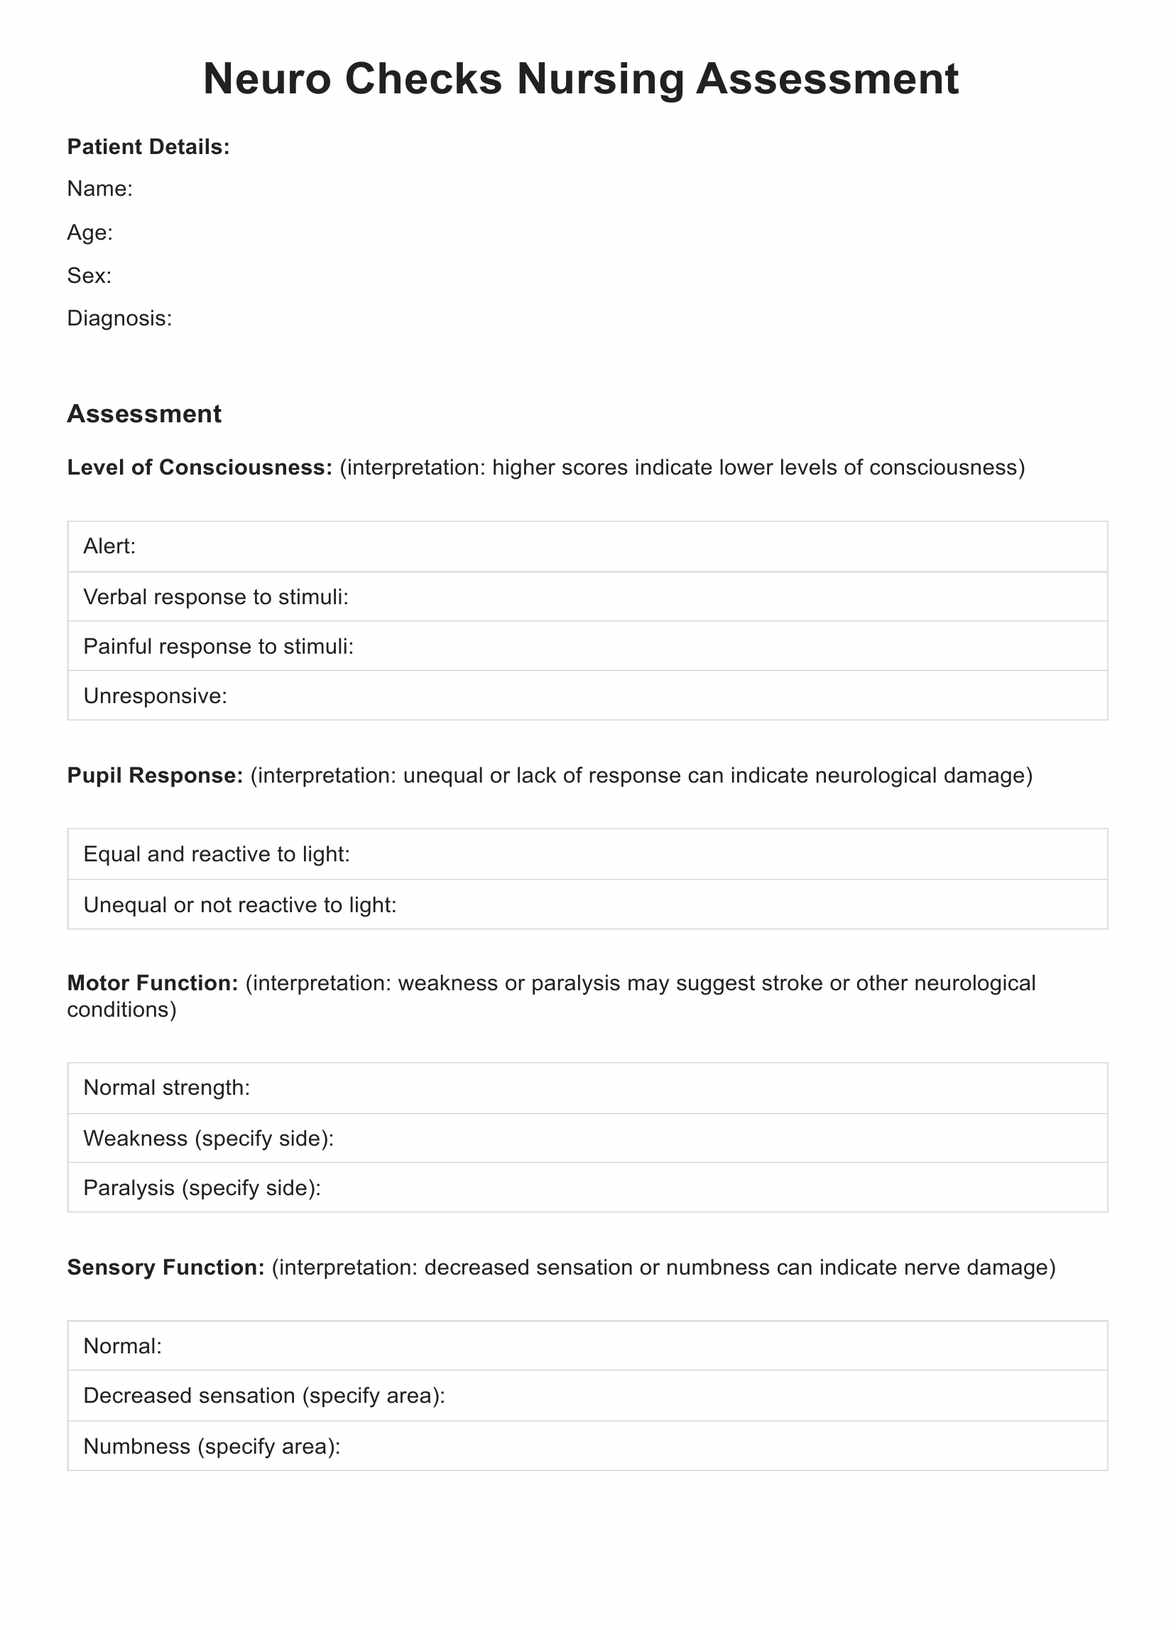 Neuro Checks Nursing PDF Example